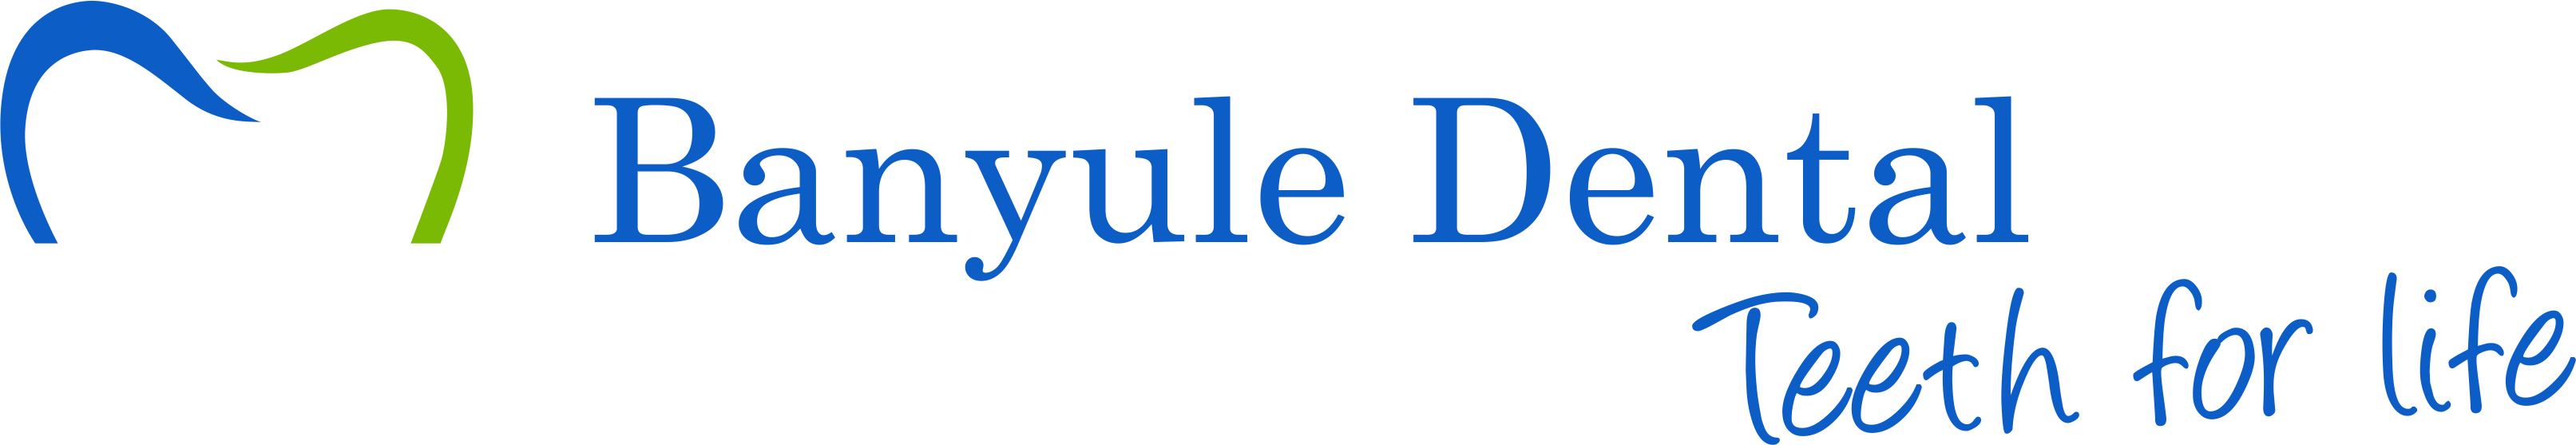 Banyule logo final